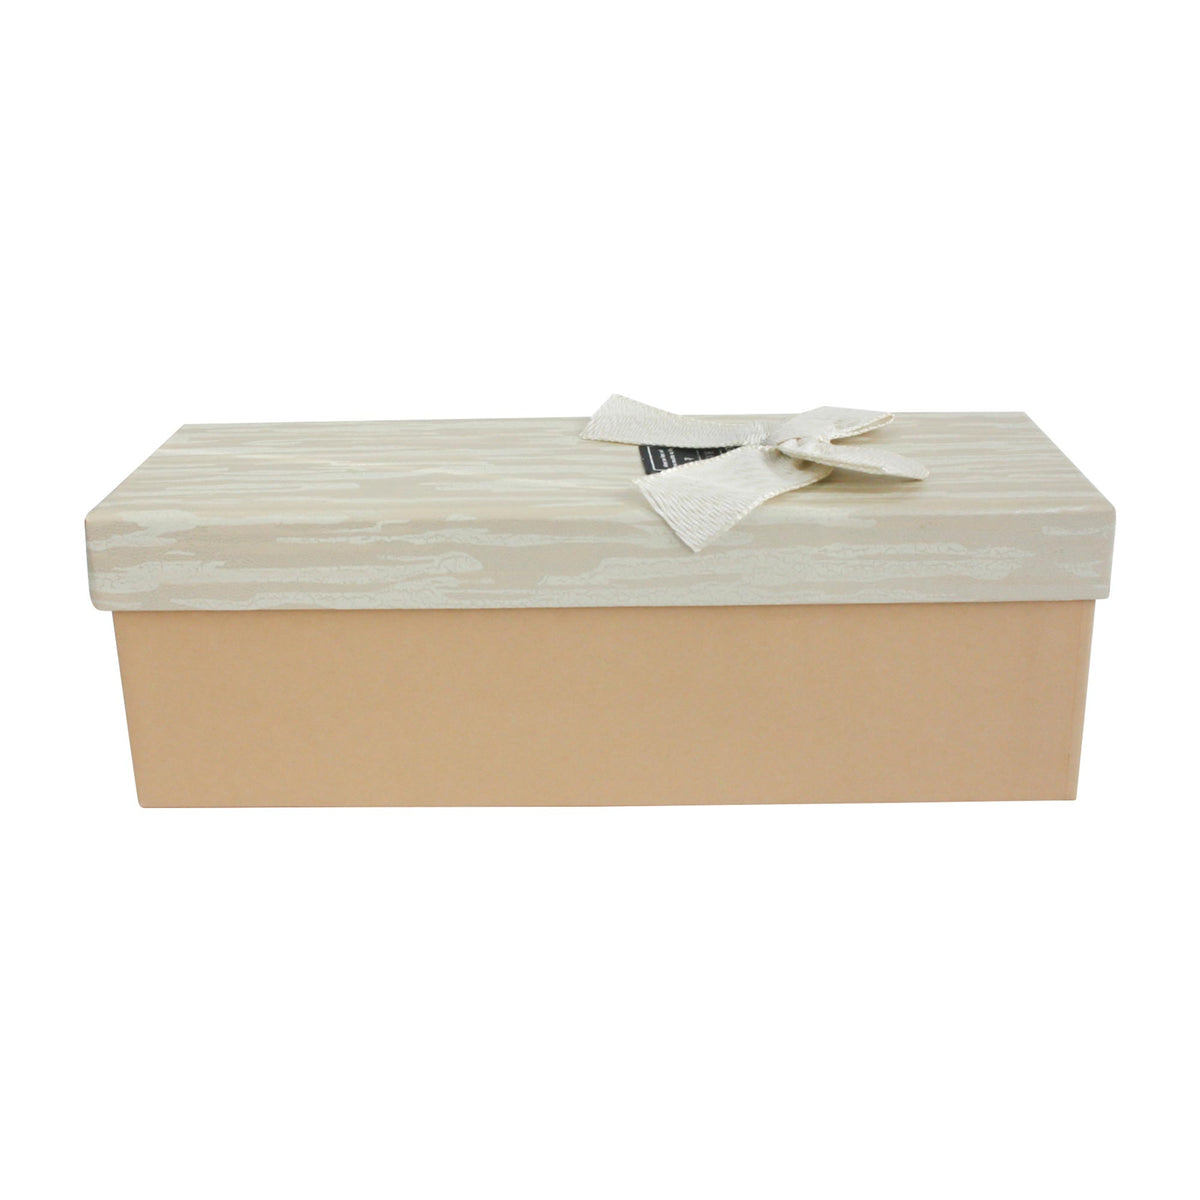 Single Textured Cream/Beige Gift Box